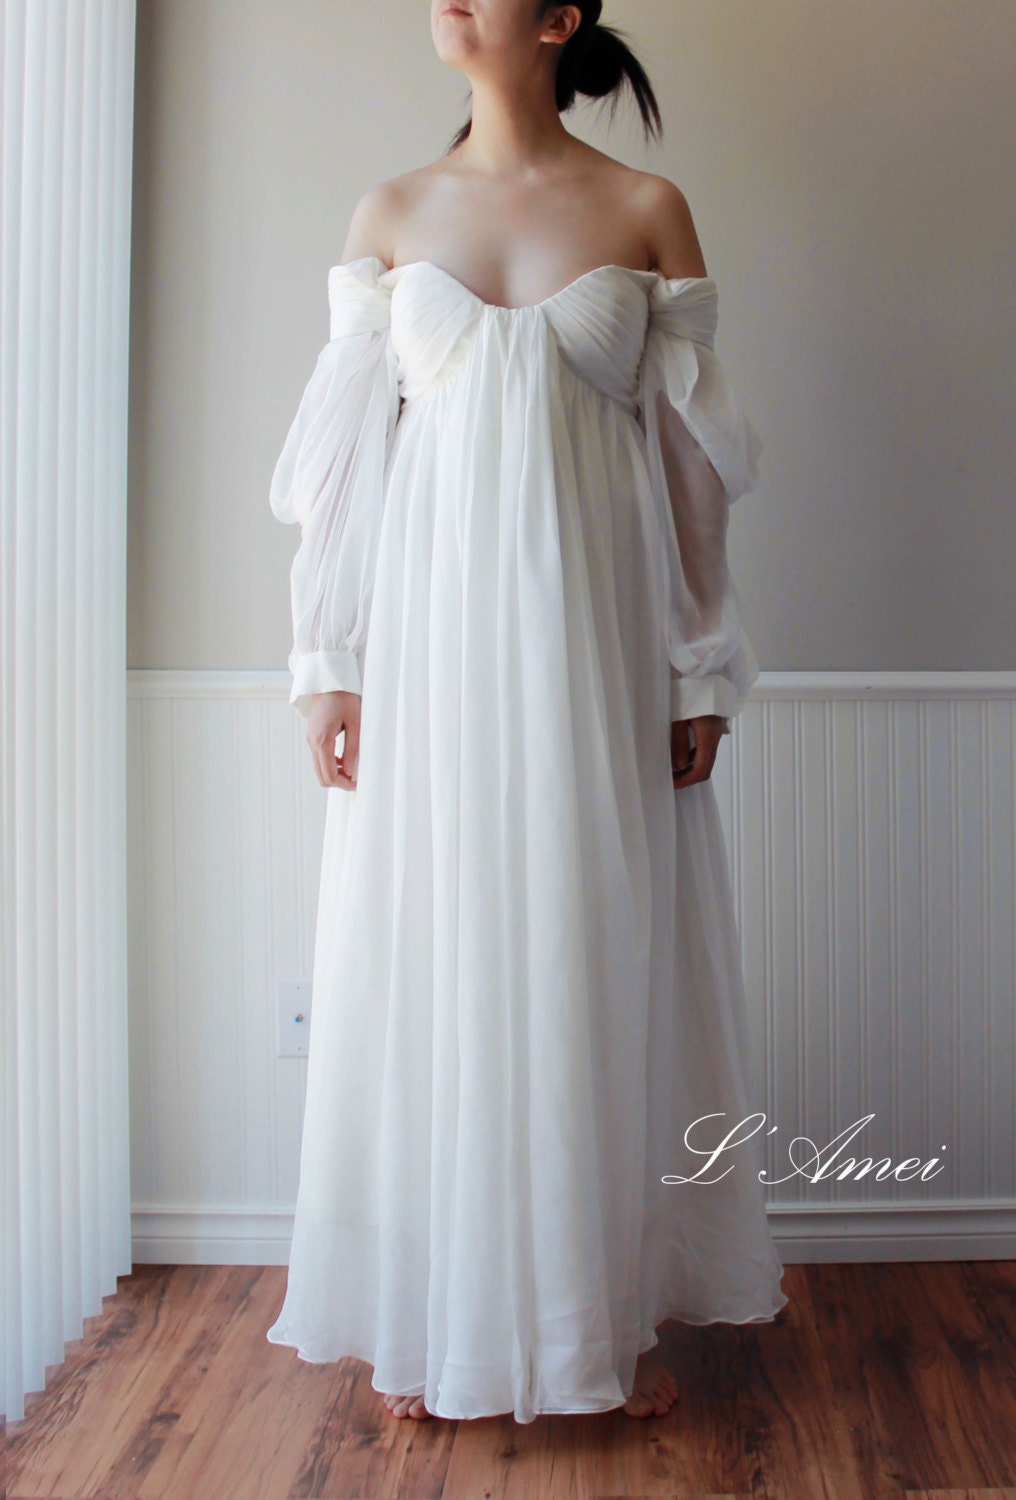 Custom Made Ancient Greece Wedding Dress made of Chiffon or